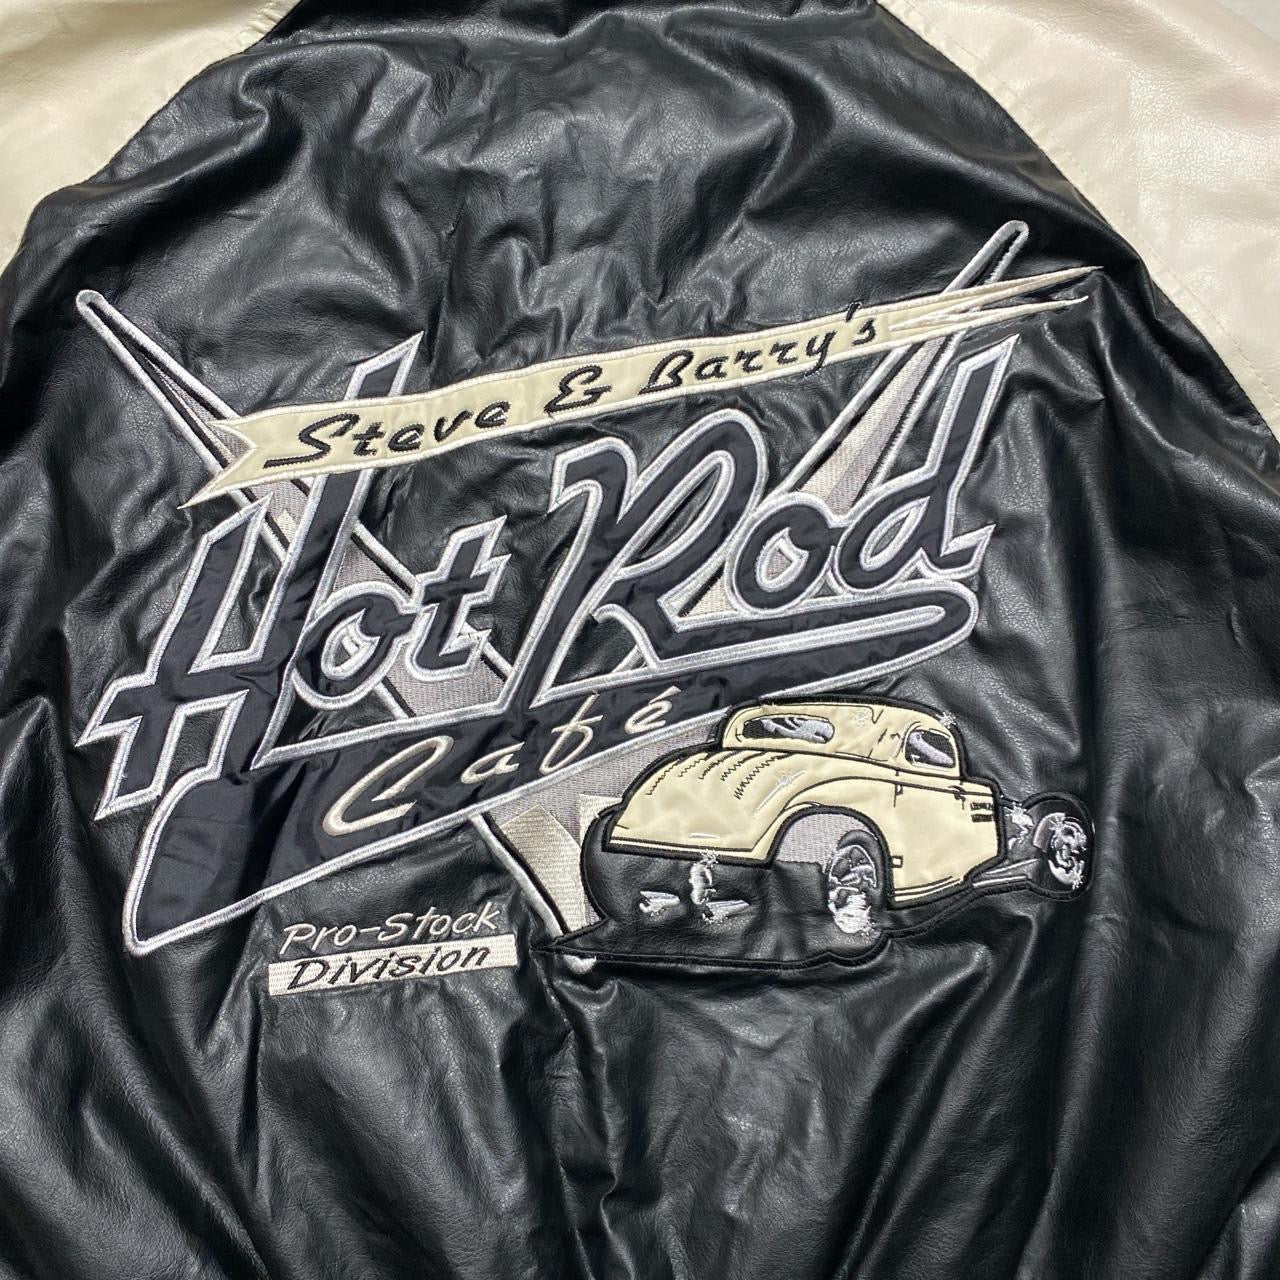 Steve and Barrys Hot Rod Leather and Wool Varsity Jacket (Medium)